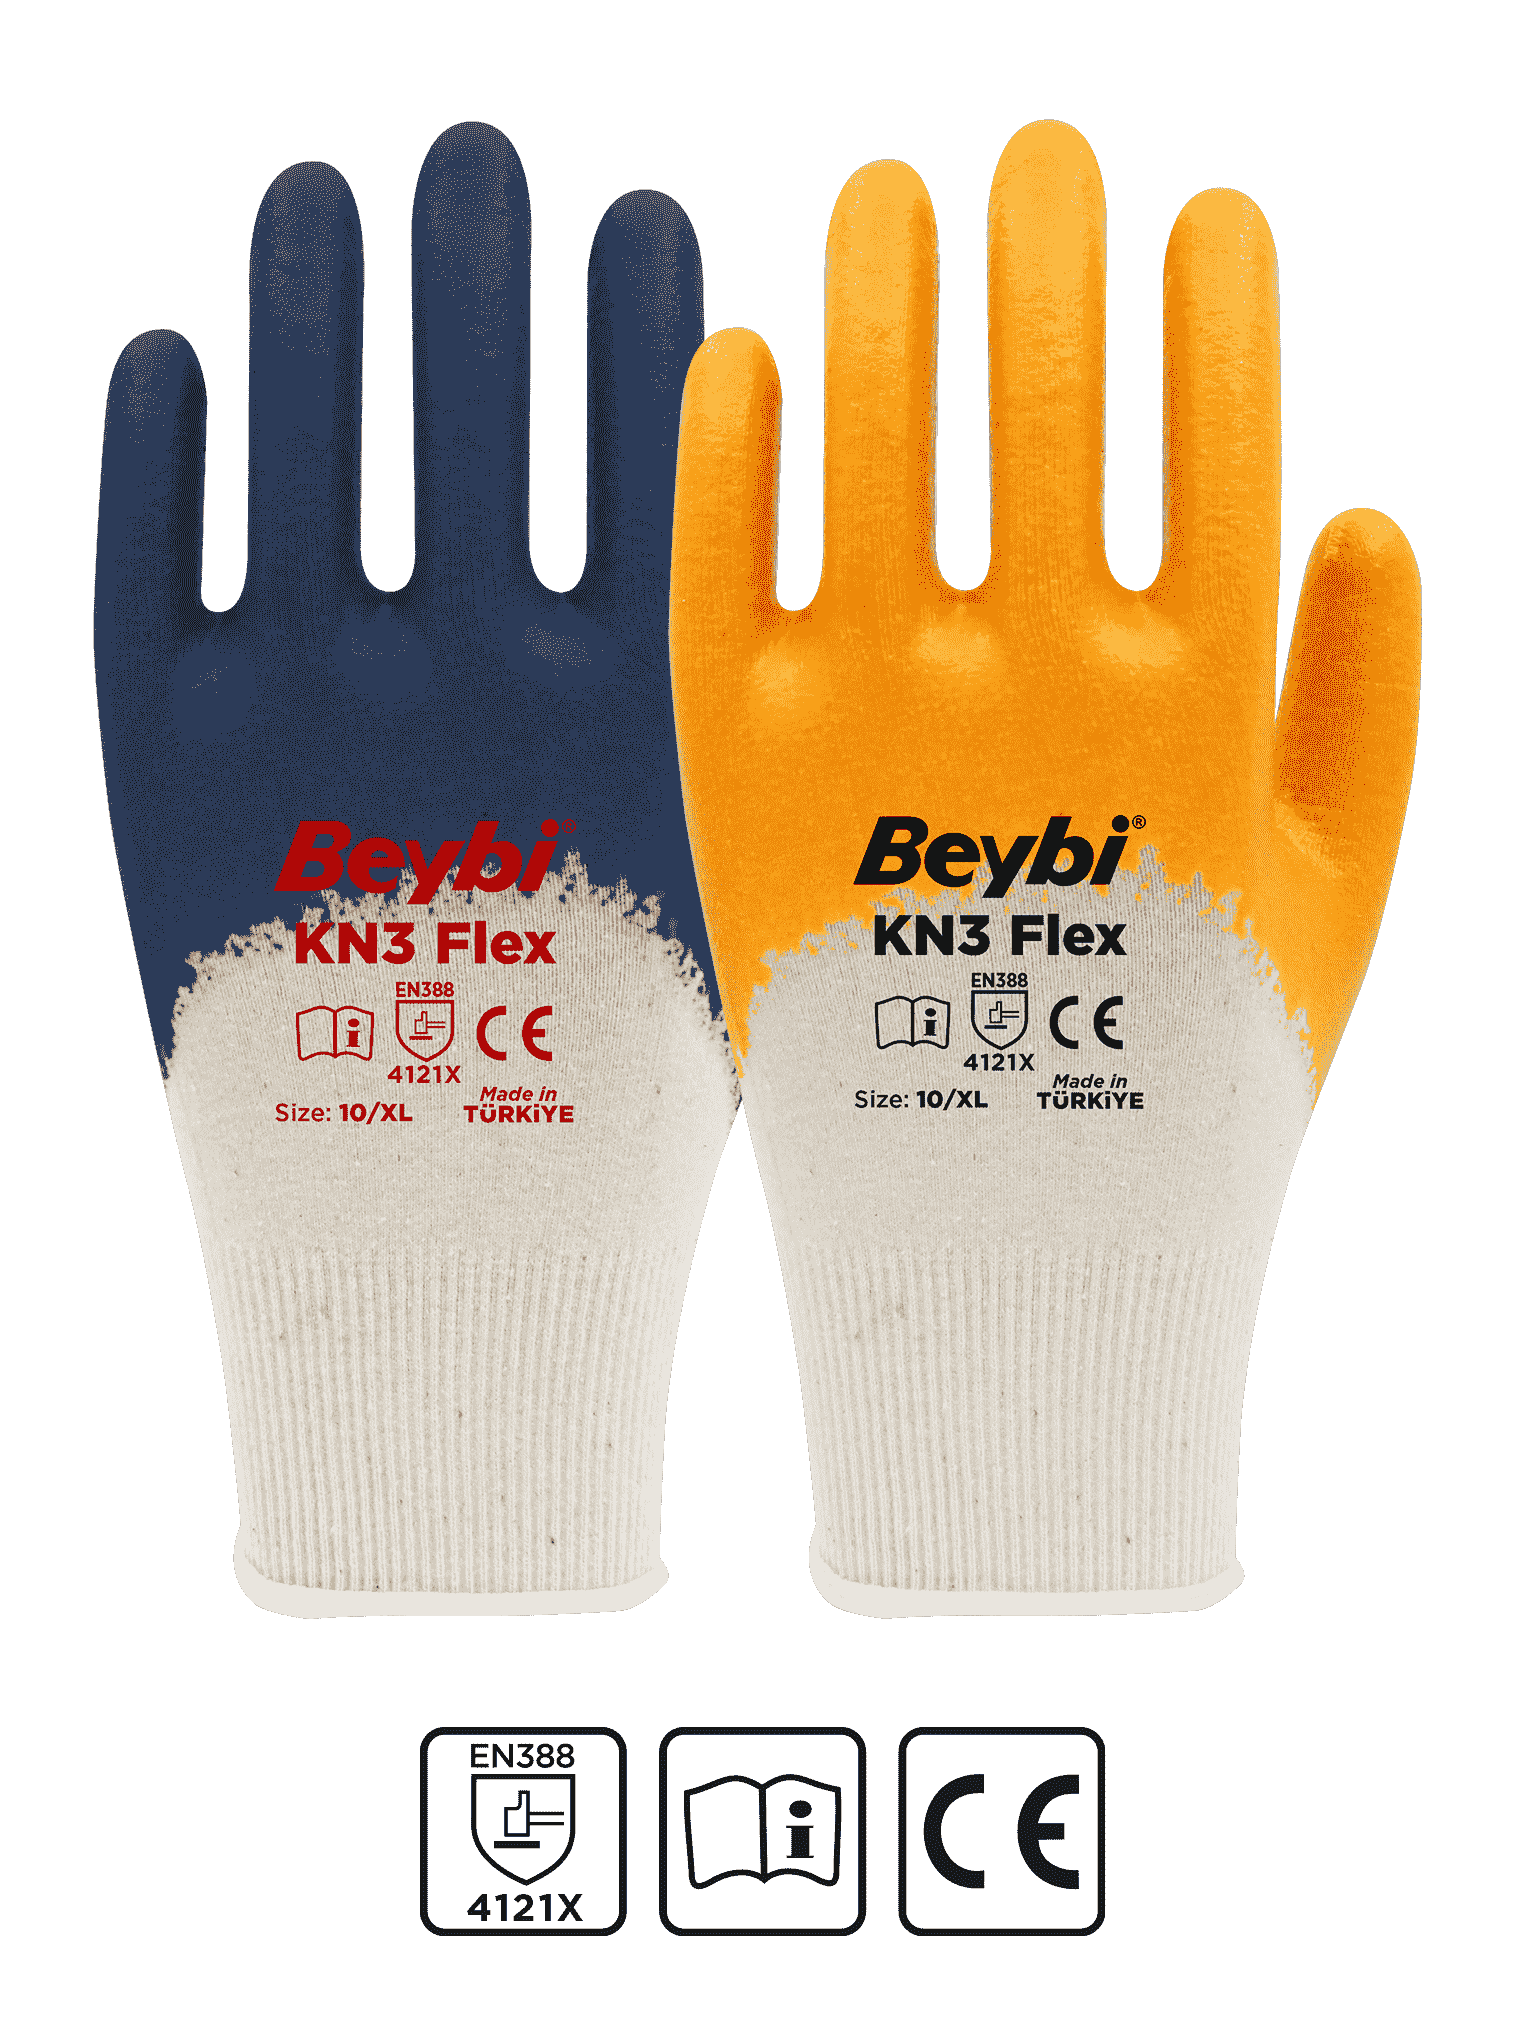 KN3 Flex Nitrile Coated Cotton Glove